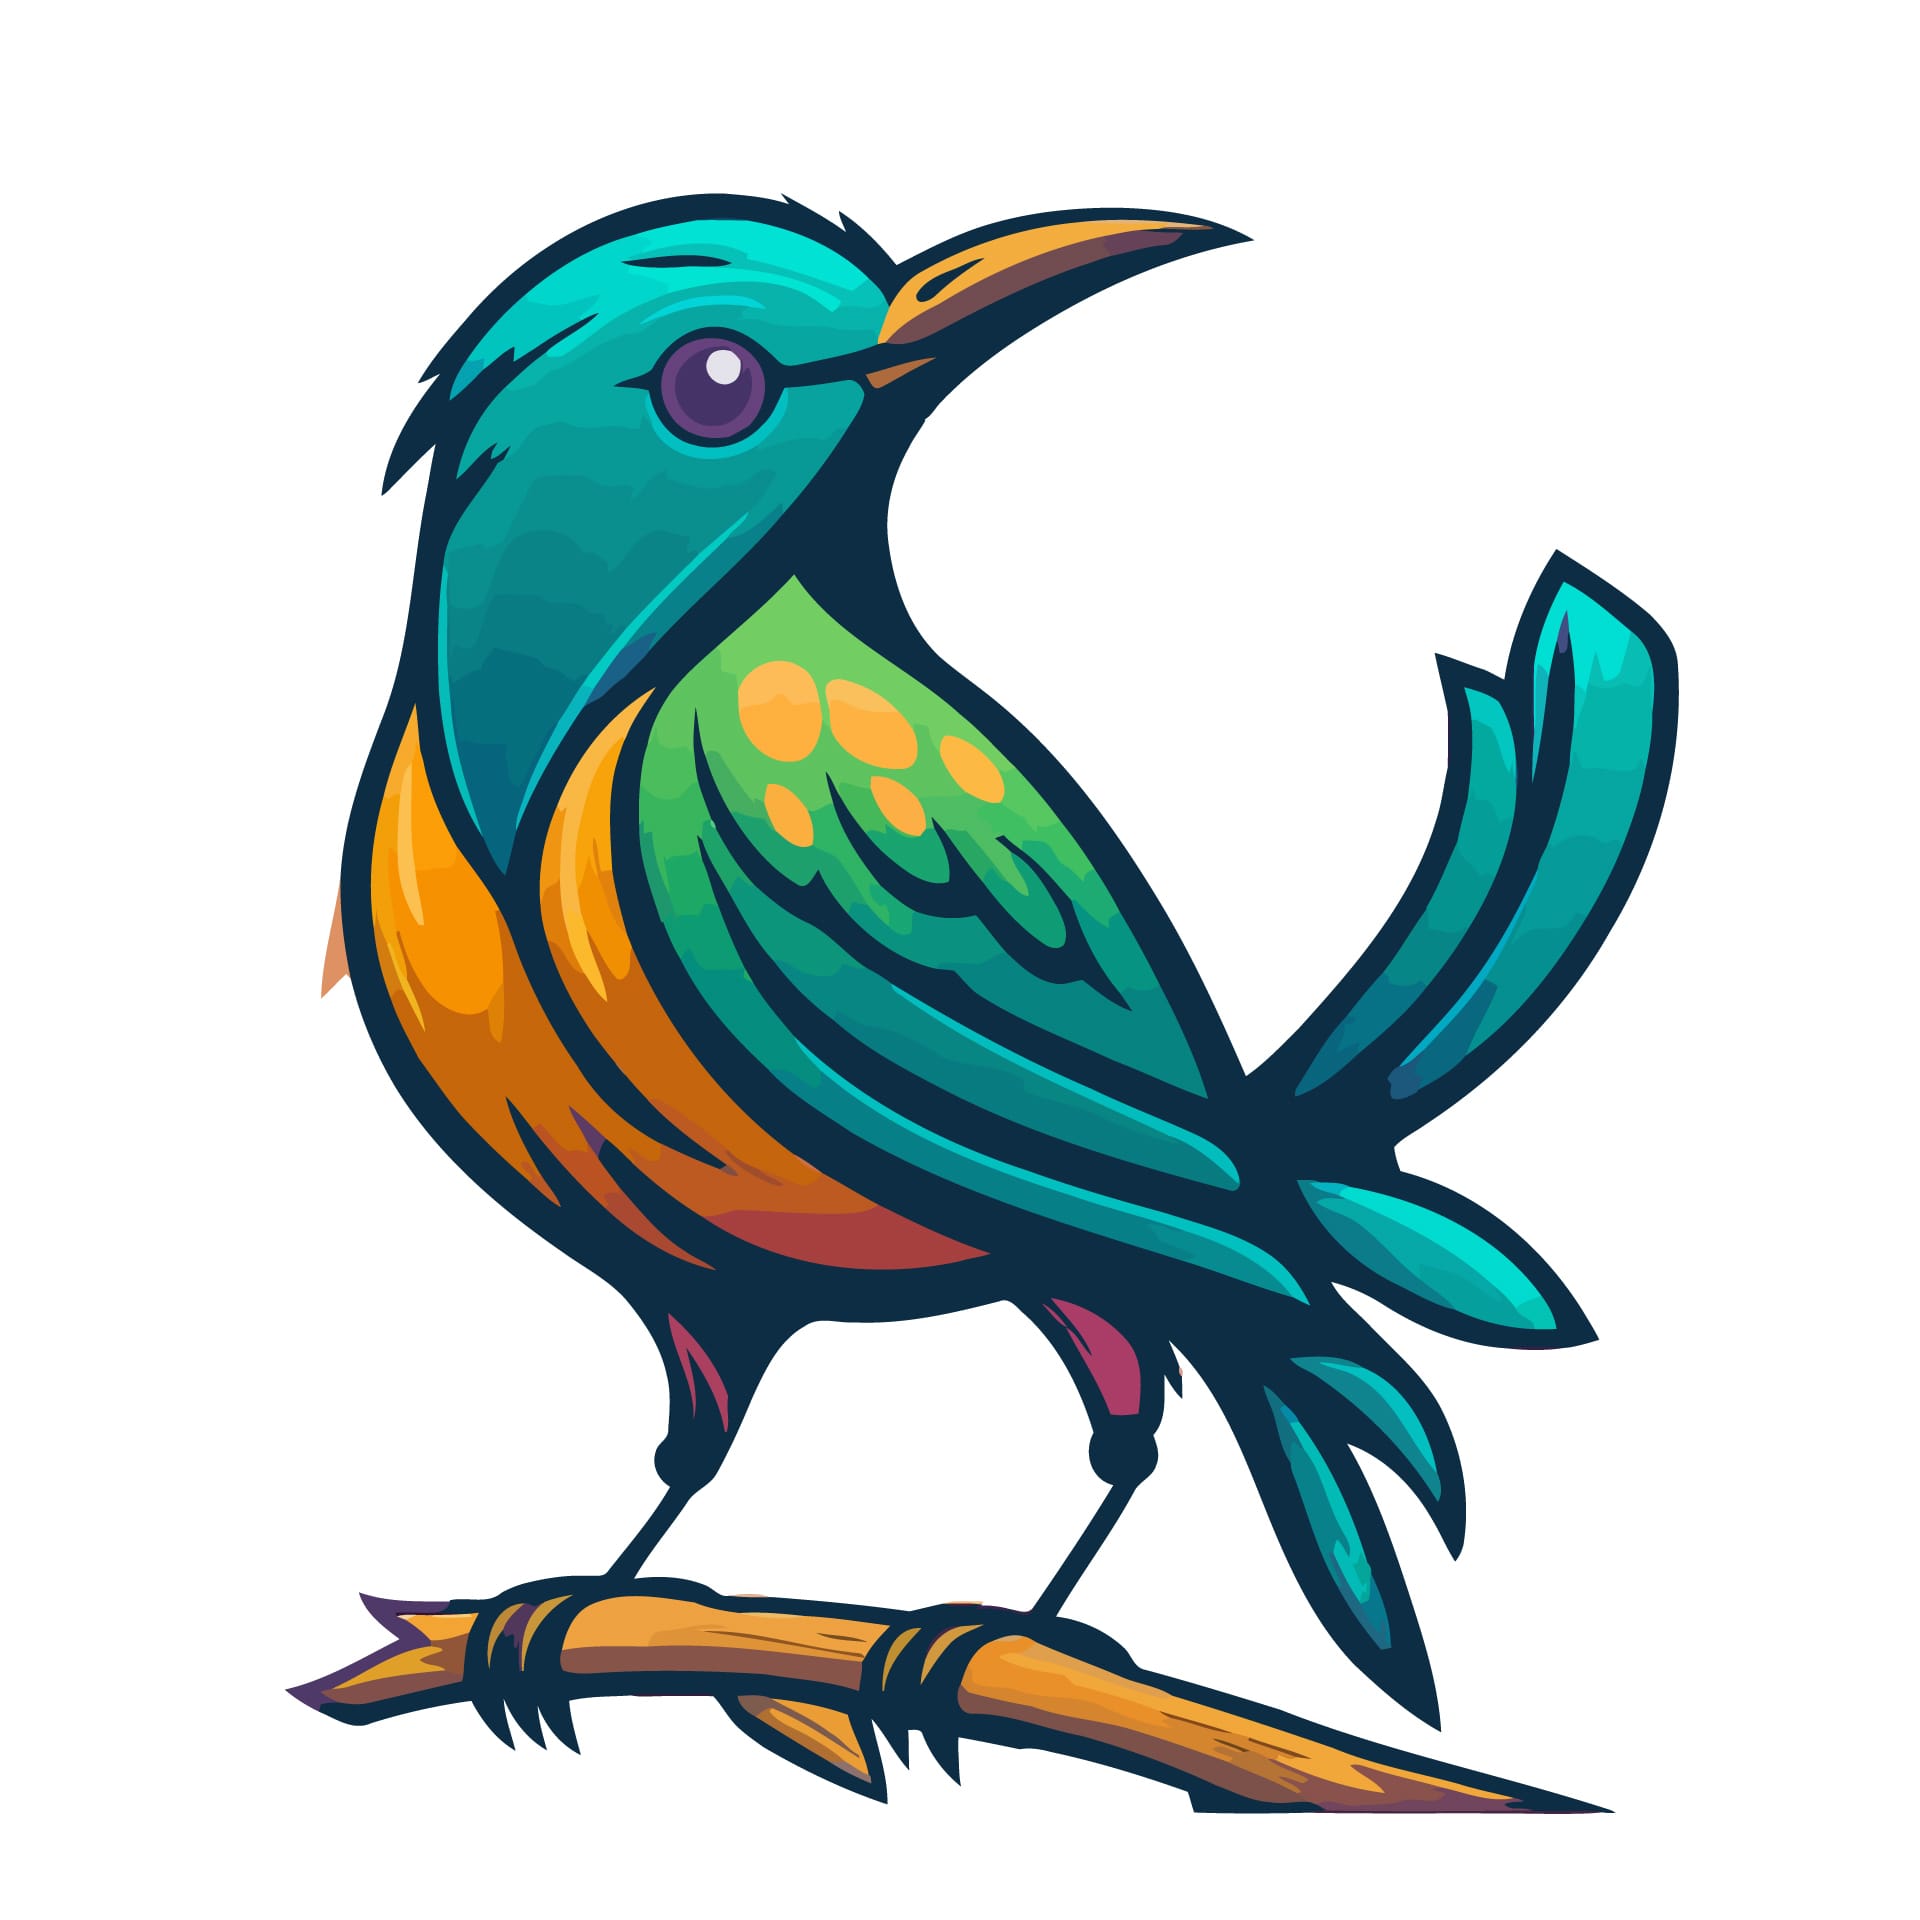 Little bird cartoon animal illustration logo mascot icon bright image